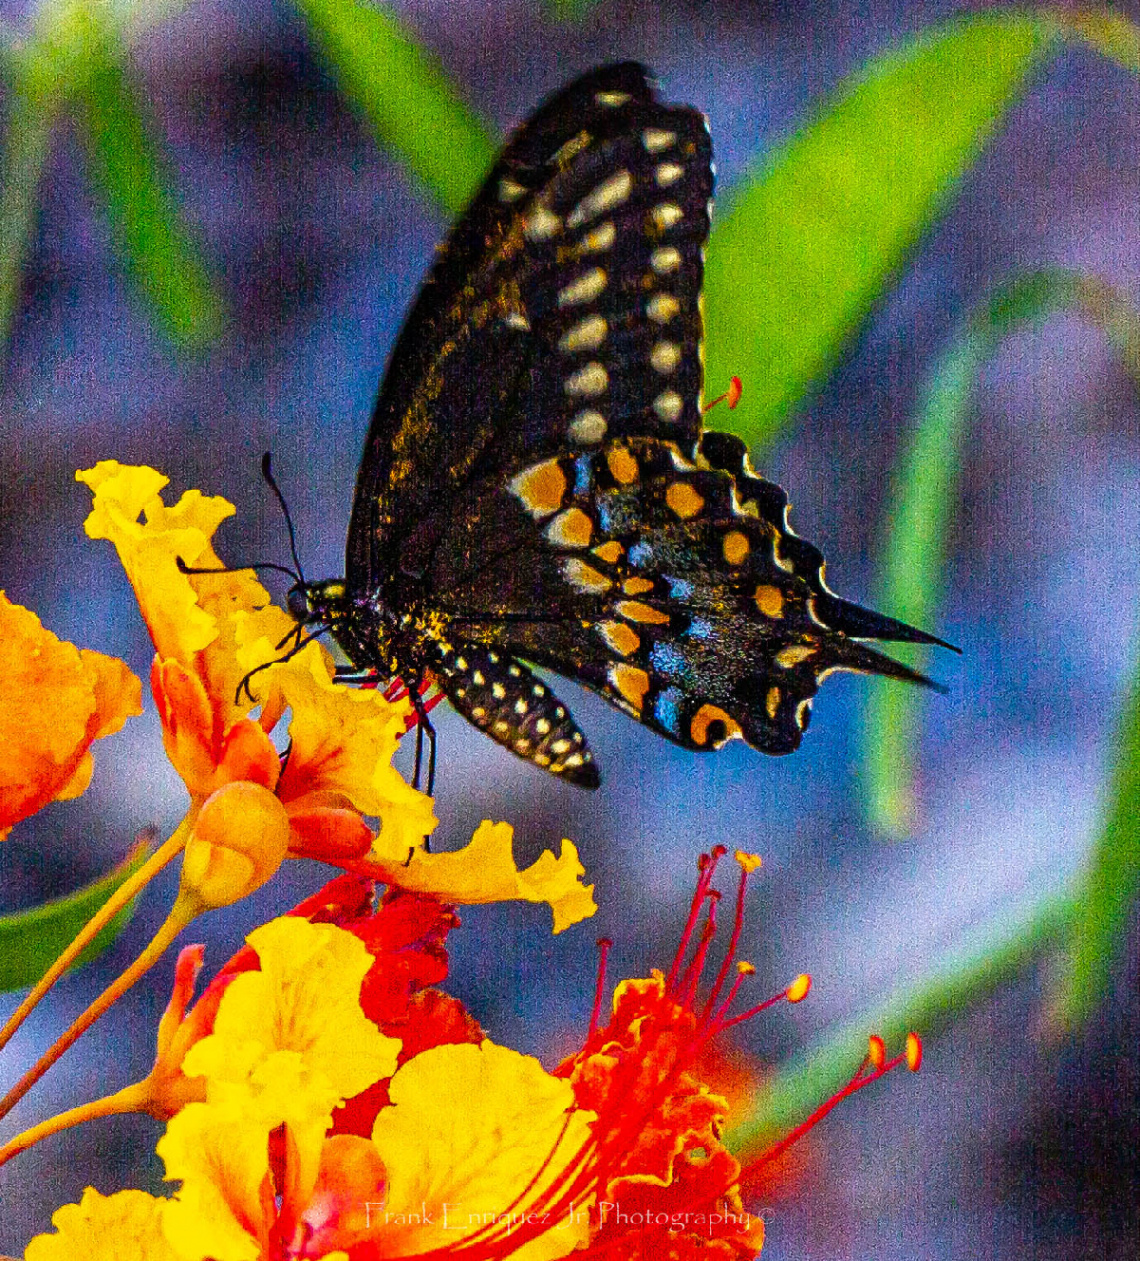 An Arizona Butterfly